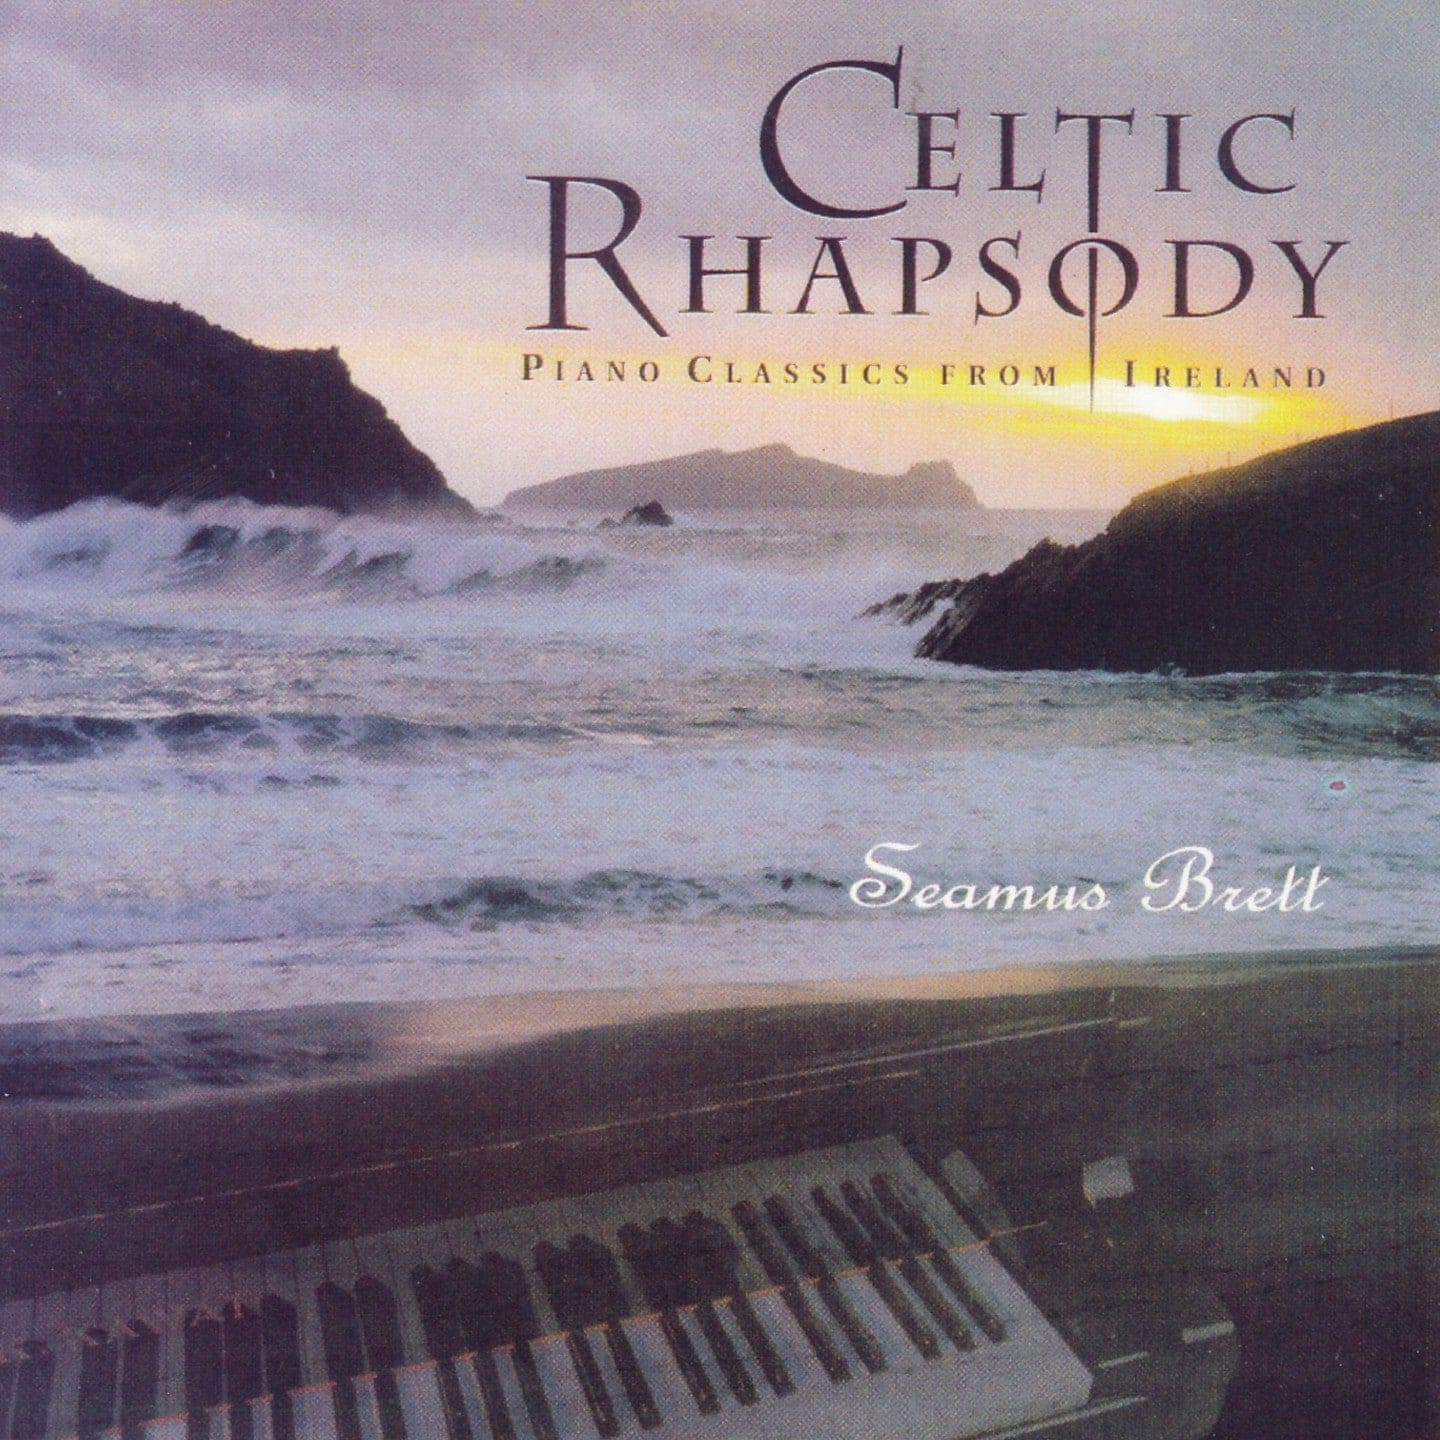 Celtic Rhapsody - Séamus Brett [CD]